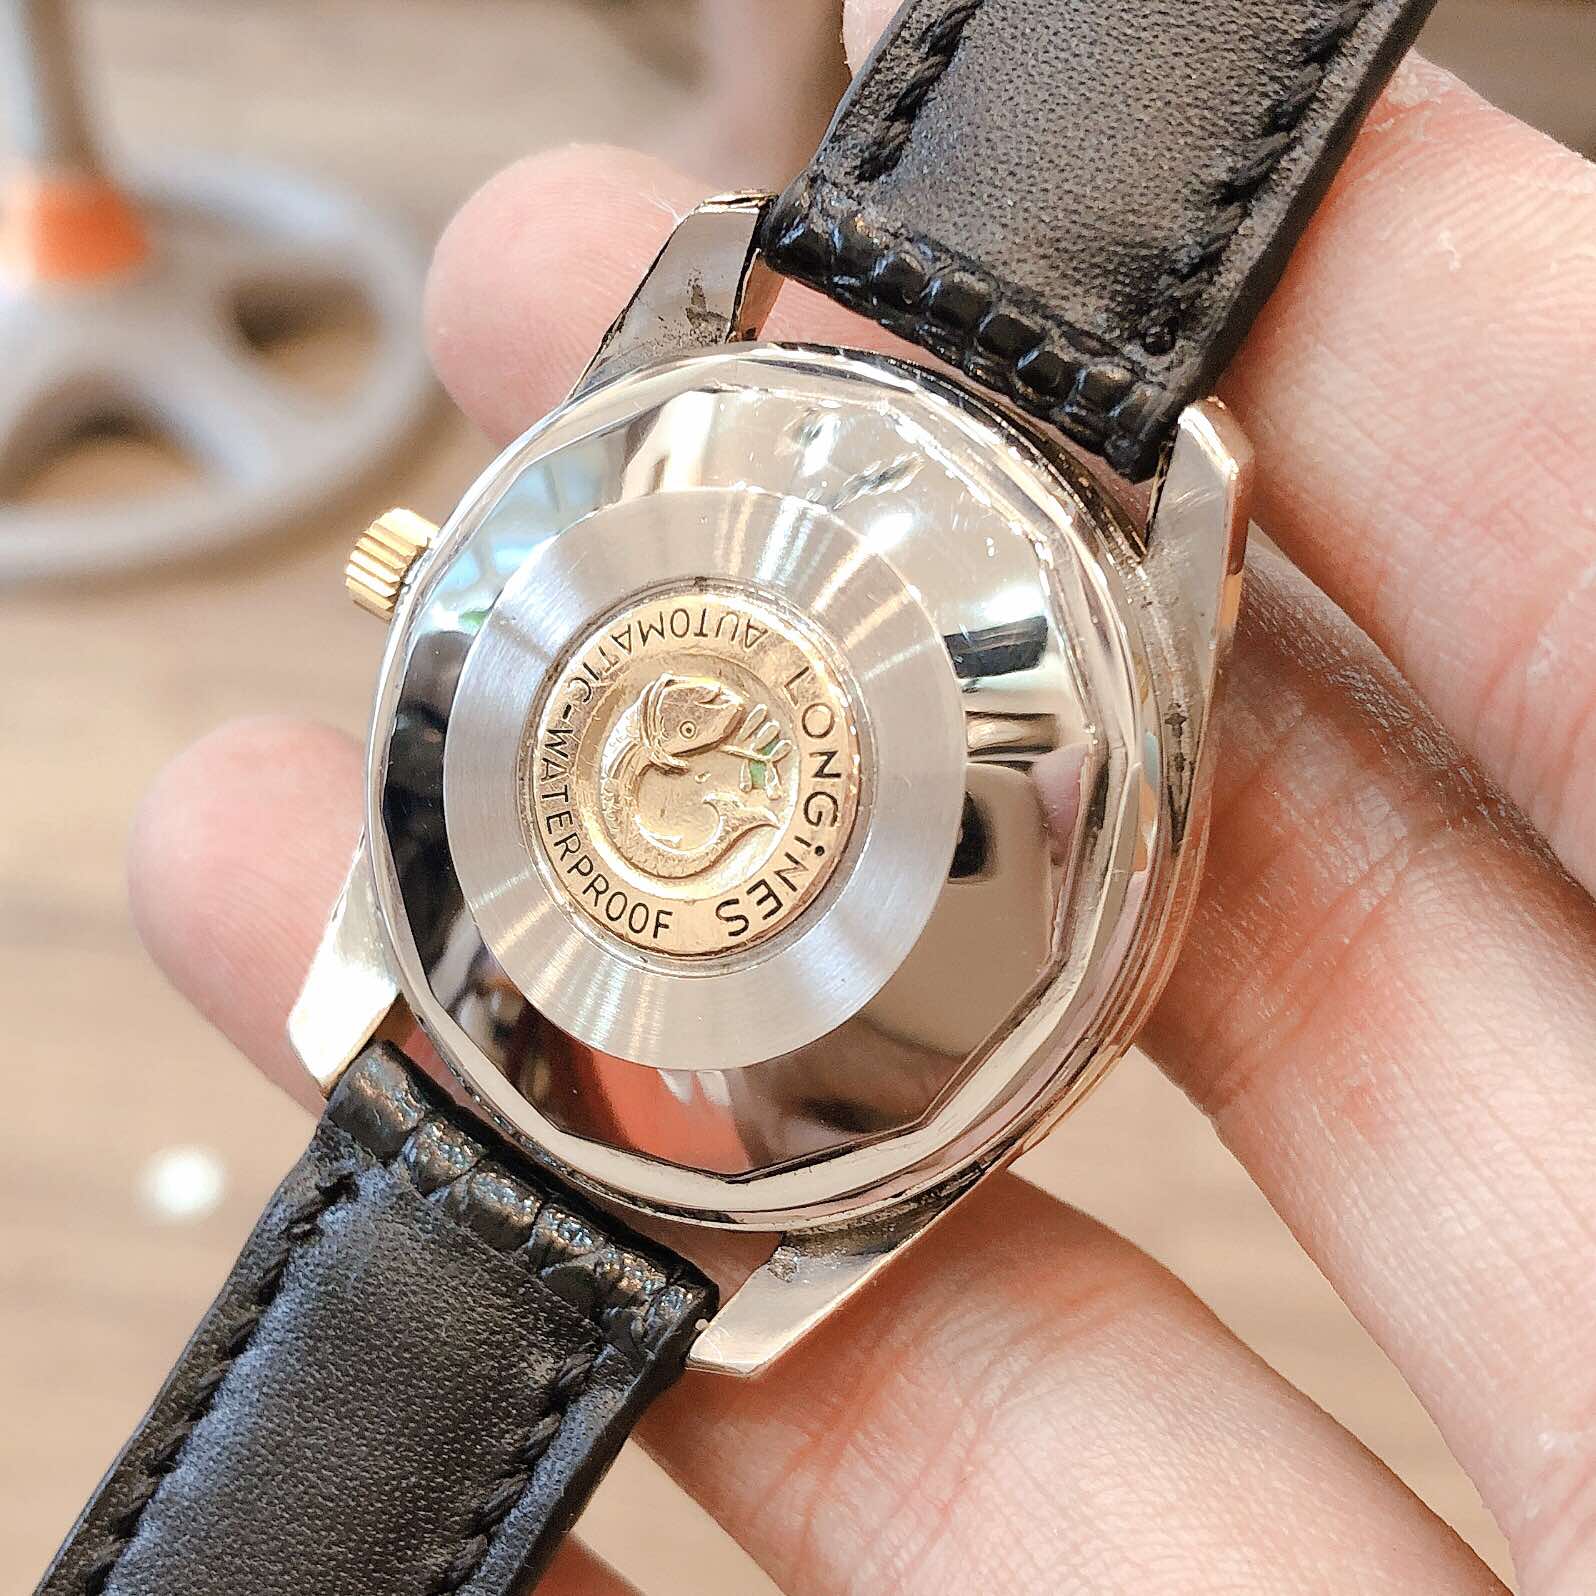 Đồng hồ cổ Longinesconques t Conquest automatic chính hãng Thuỵ Sĩ